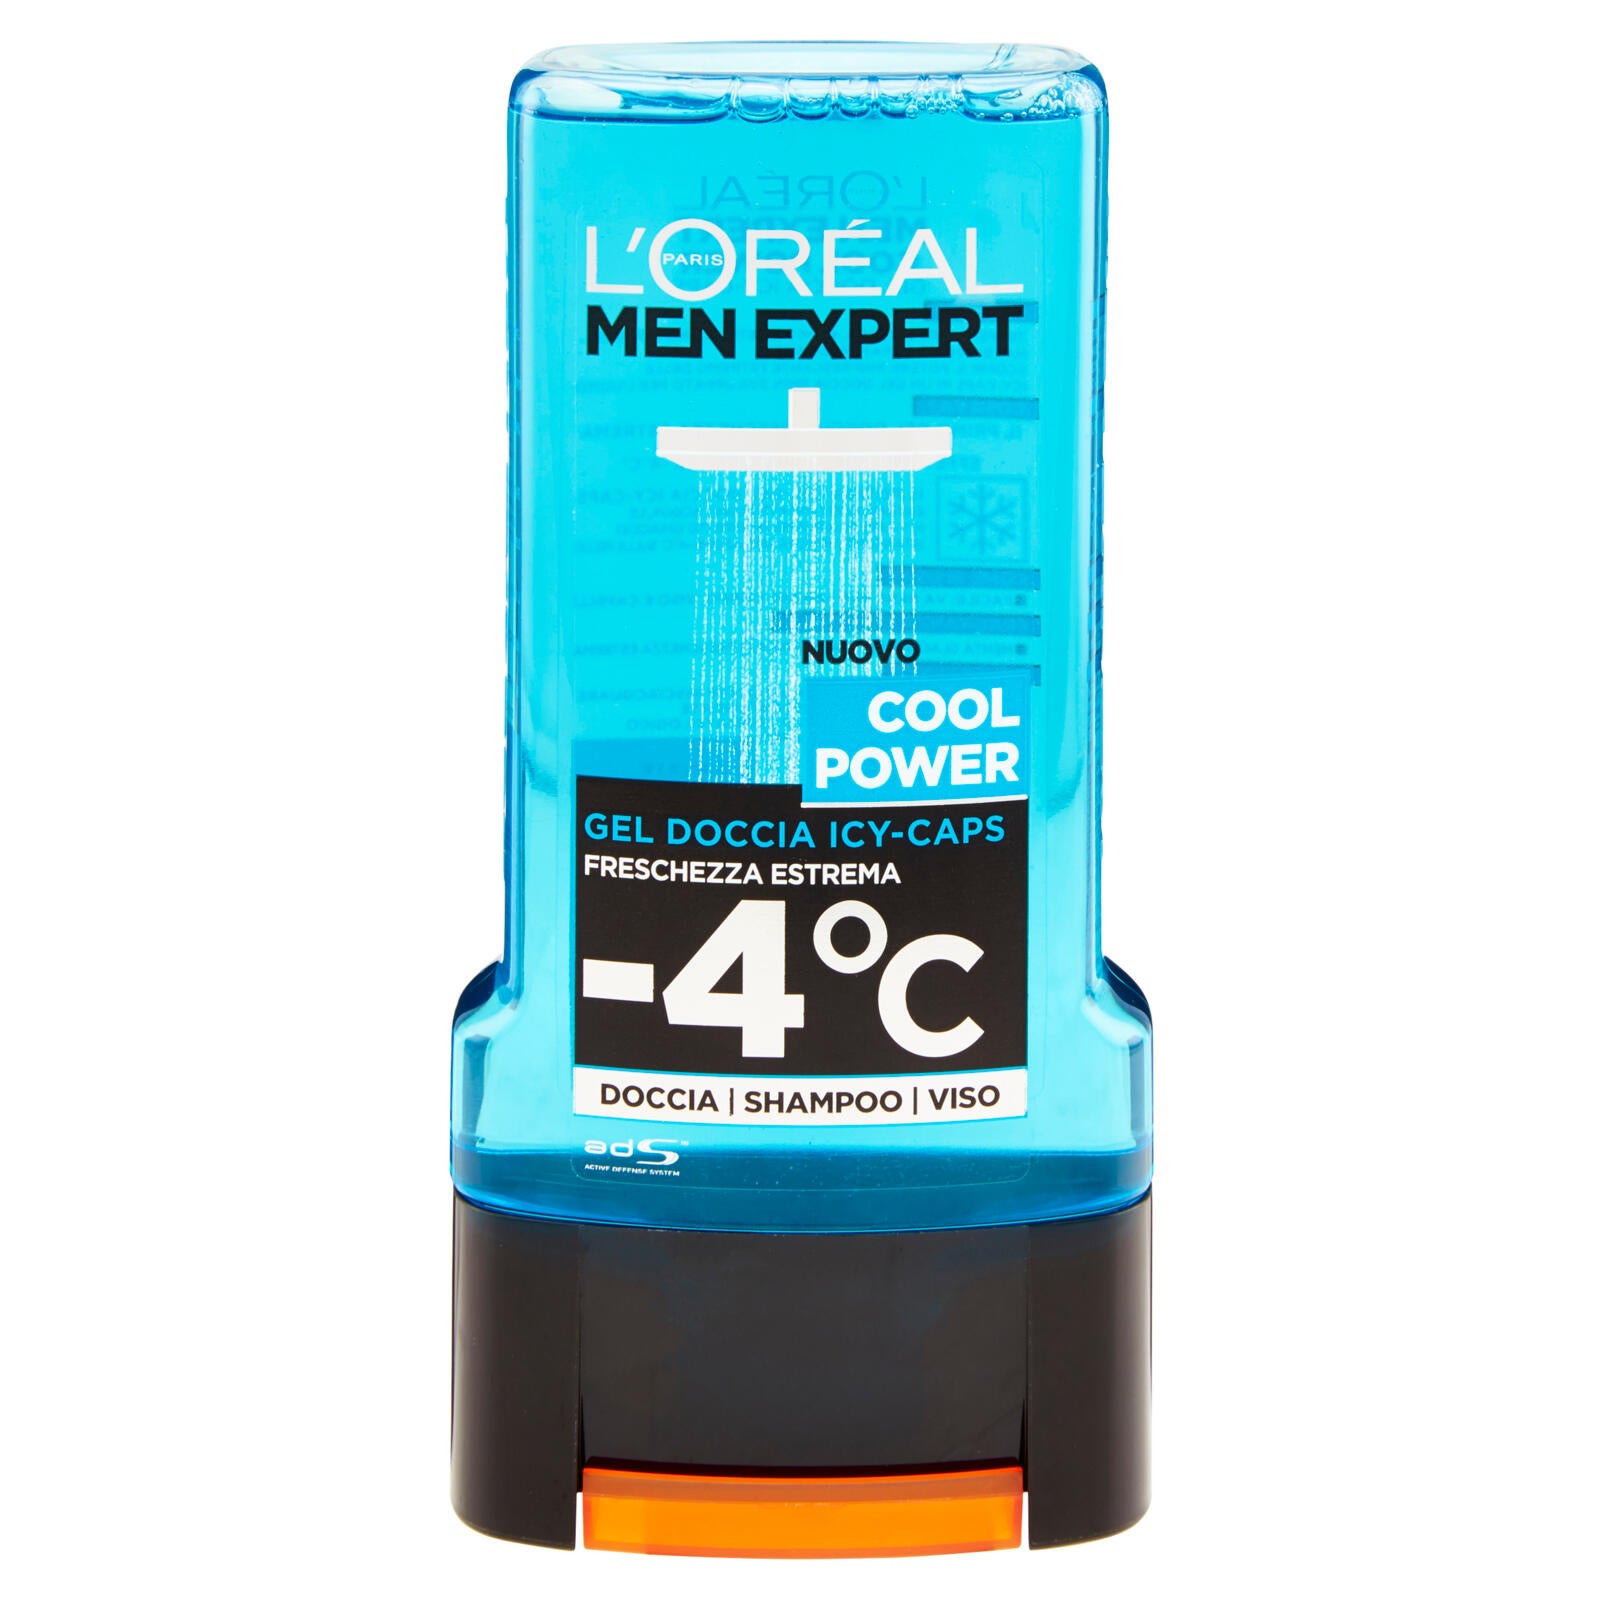 L'Oréal Paris Men Expert Cool Power Gel Doccia Icy-Caps Freschezza Estrema -4°C 300 ml